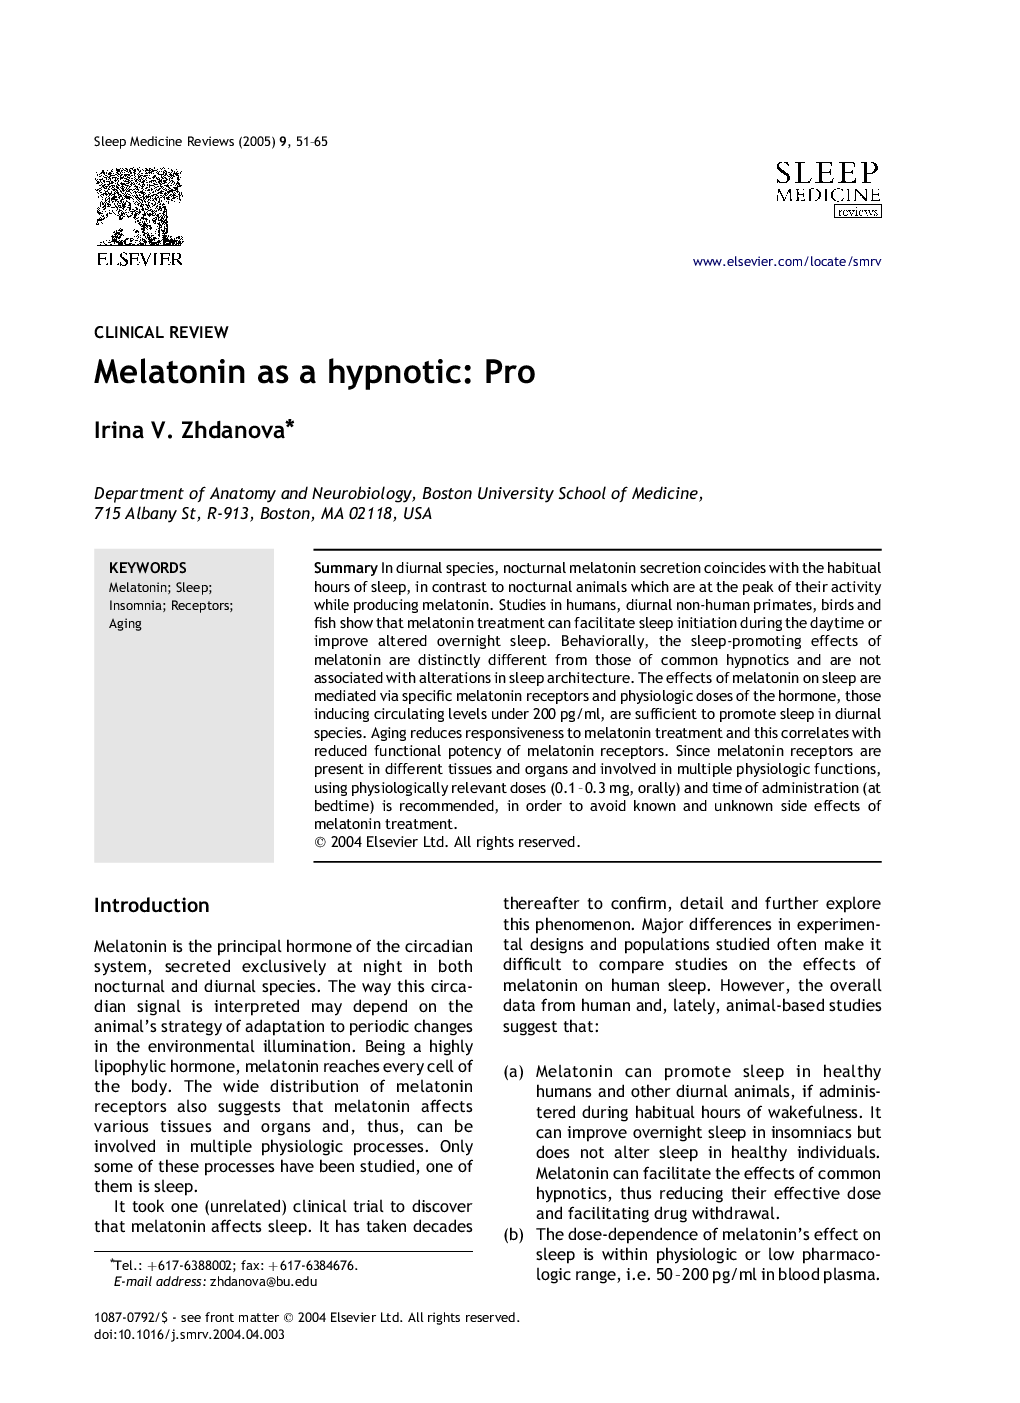 Melatonin as a hypnotic: Pro